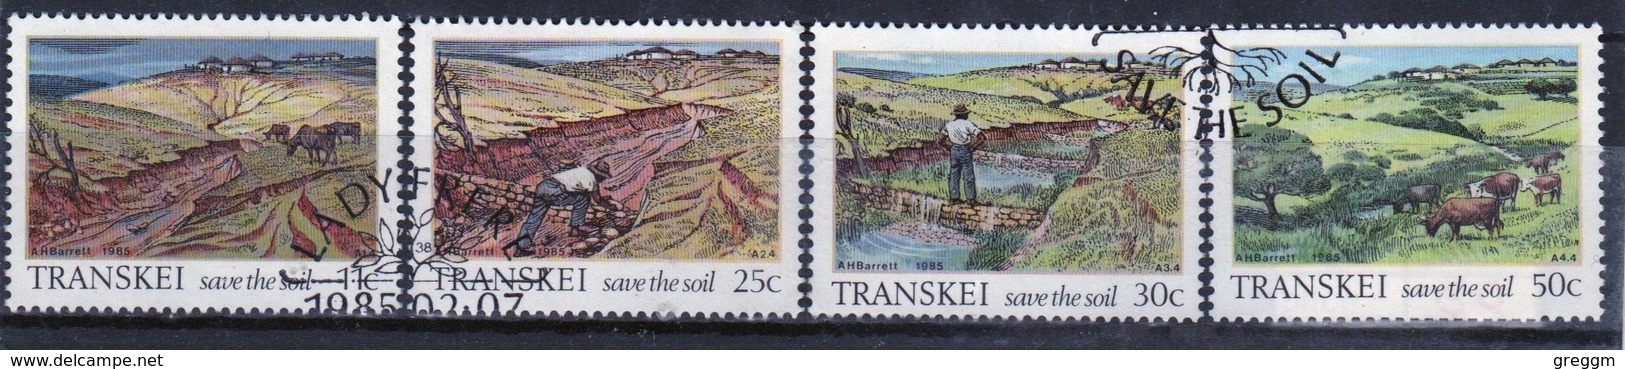 Transkei 1985 Set Of Stamps To Celebrate Soil Conservation. - Transkei